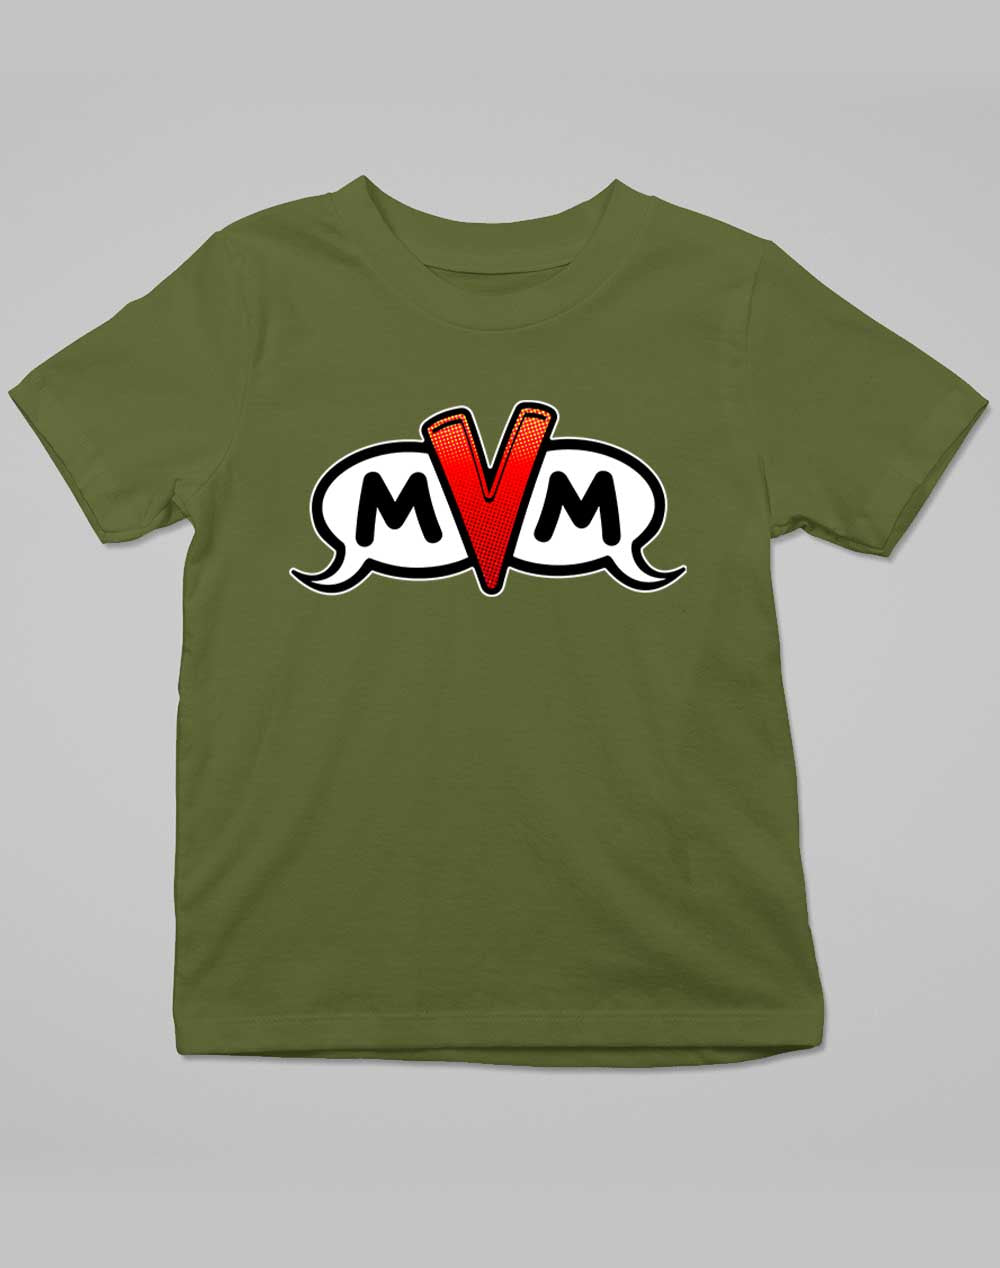 Army - MvM Logo Kids T-Shirt